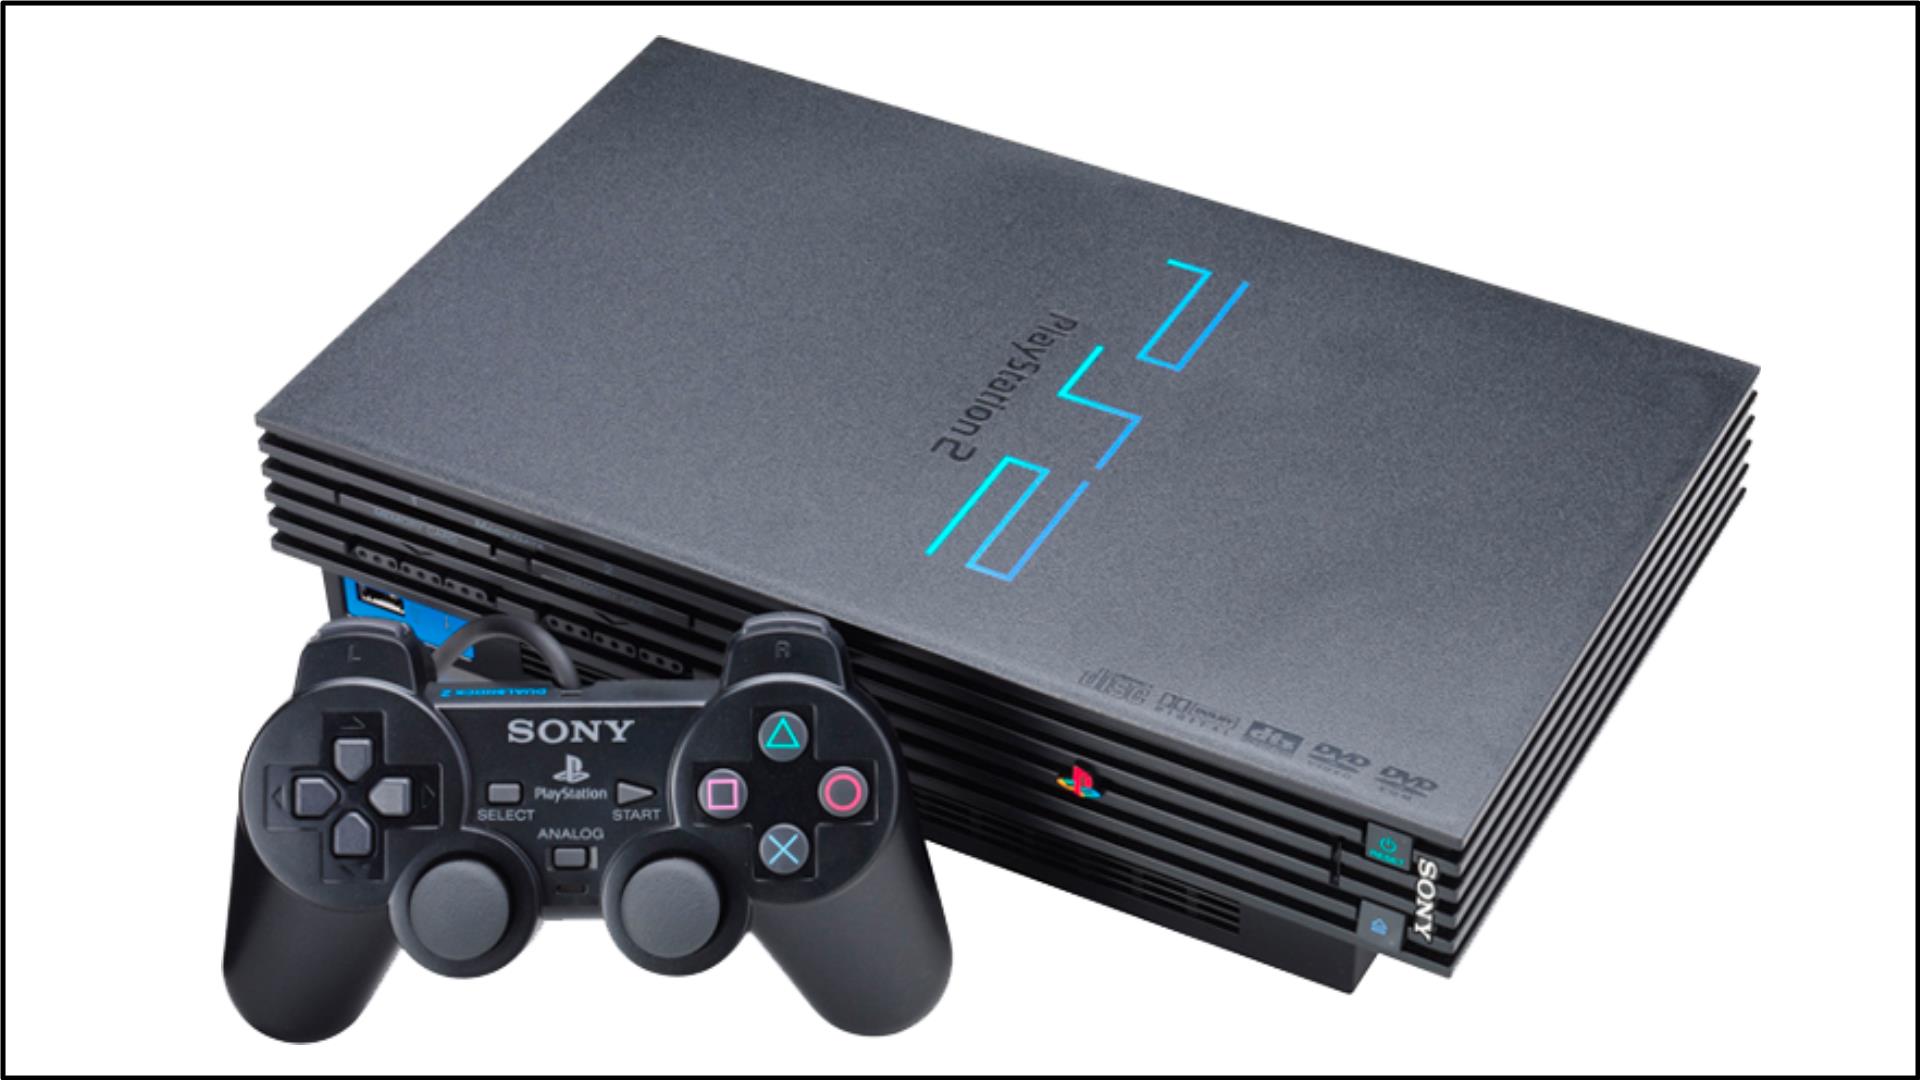 1 – PlayStation 2